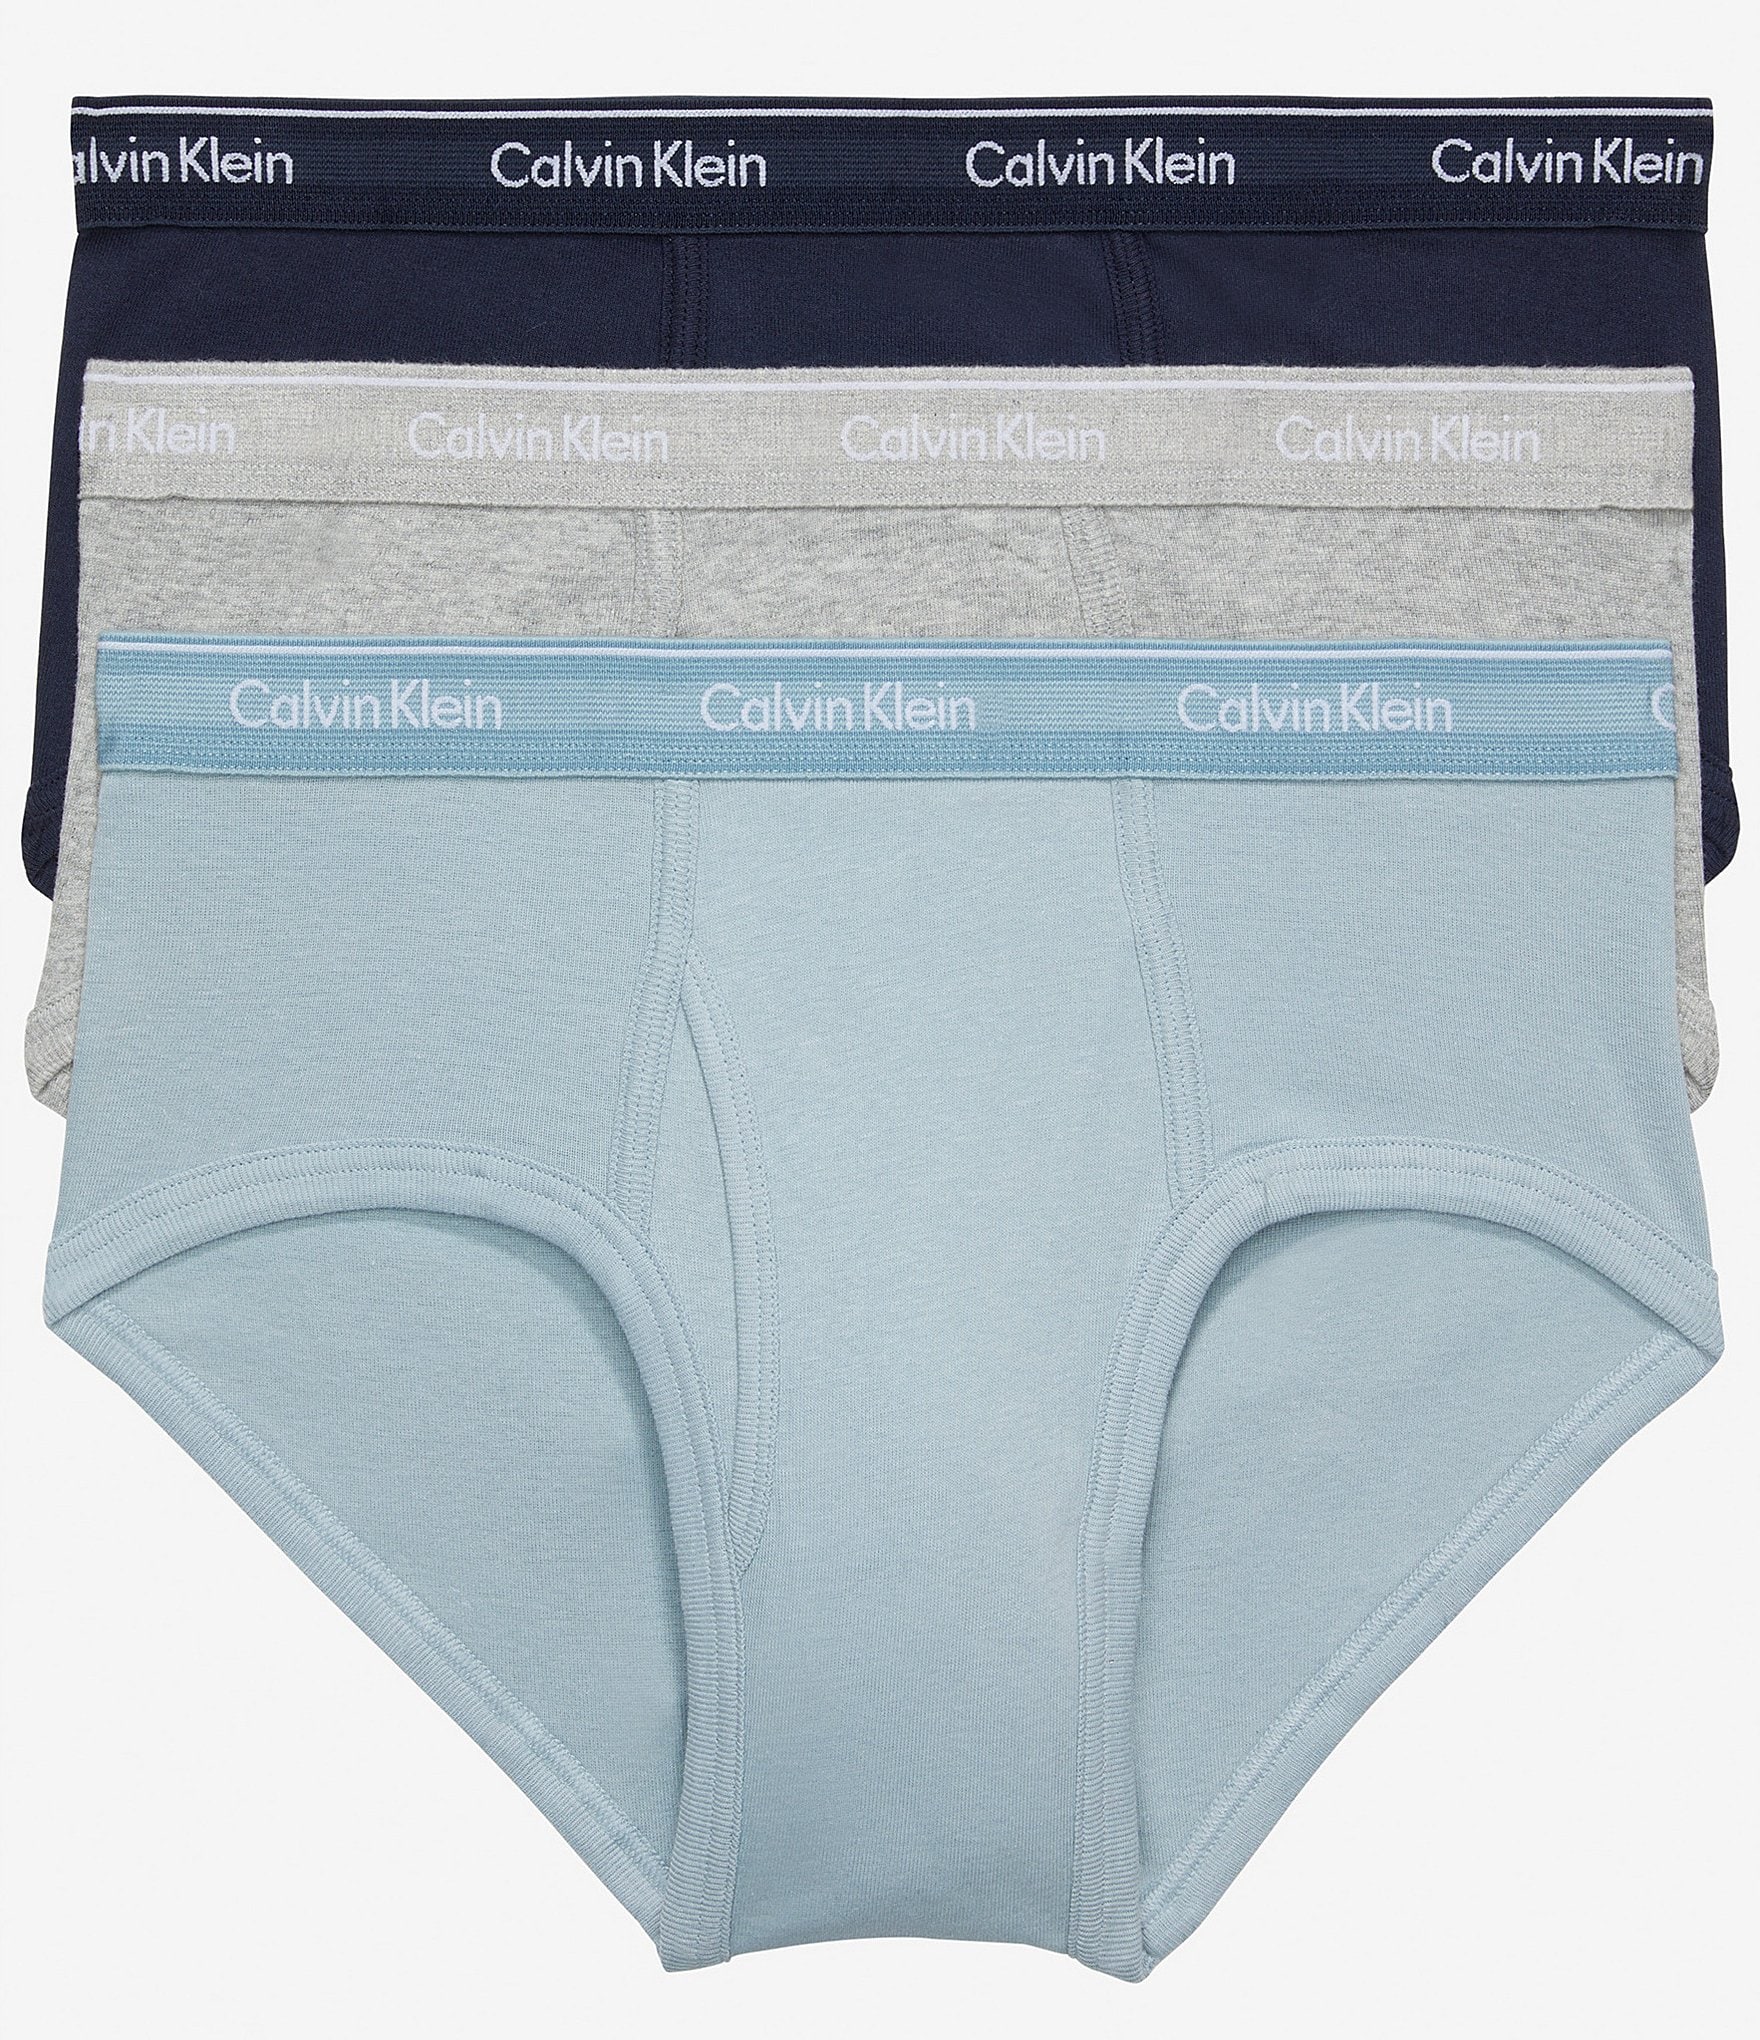 Calvin Klein Men's Cotton Classics 5-Pack Brief, 5 Black, Small at